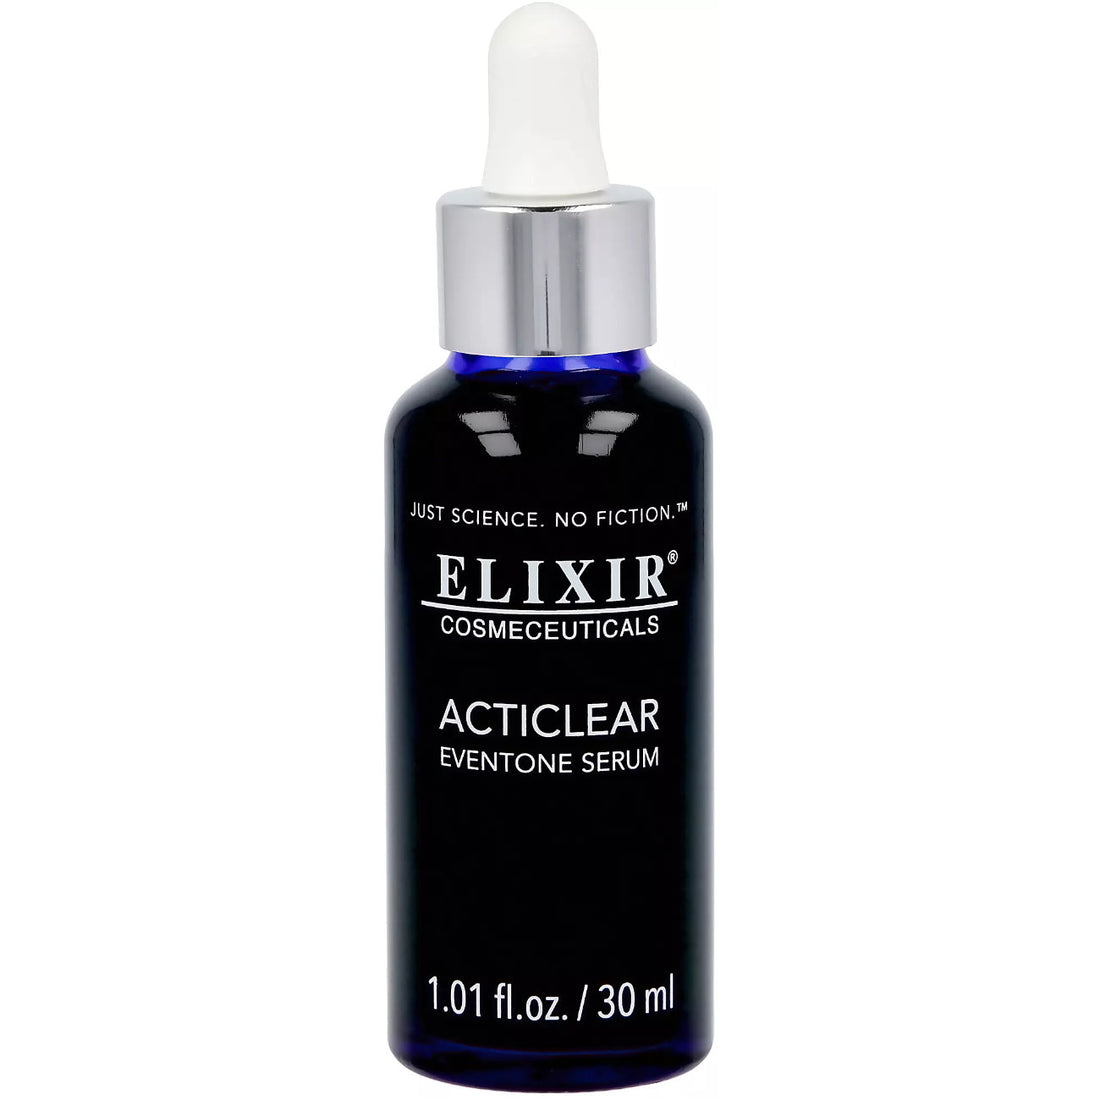 Elixir Acticlear Eventone Serum